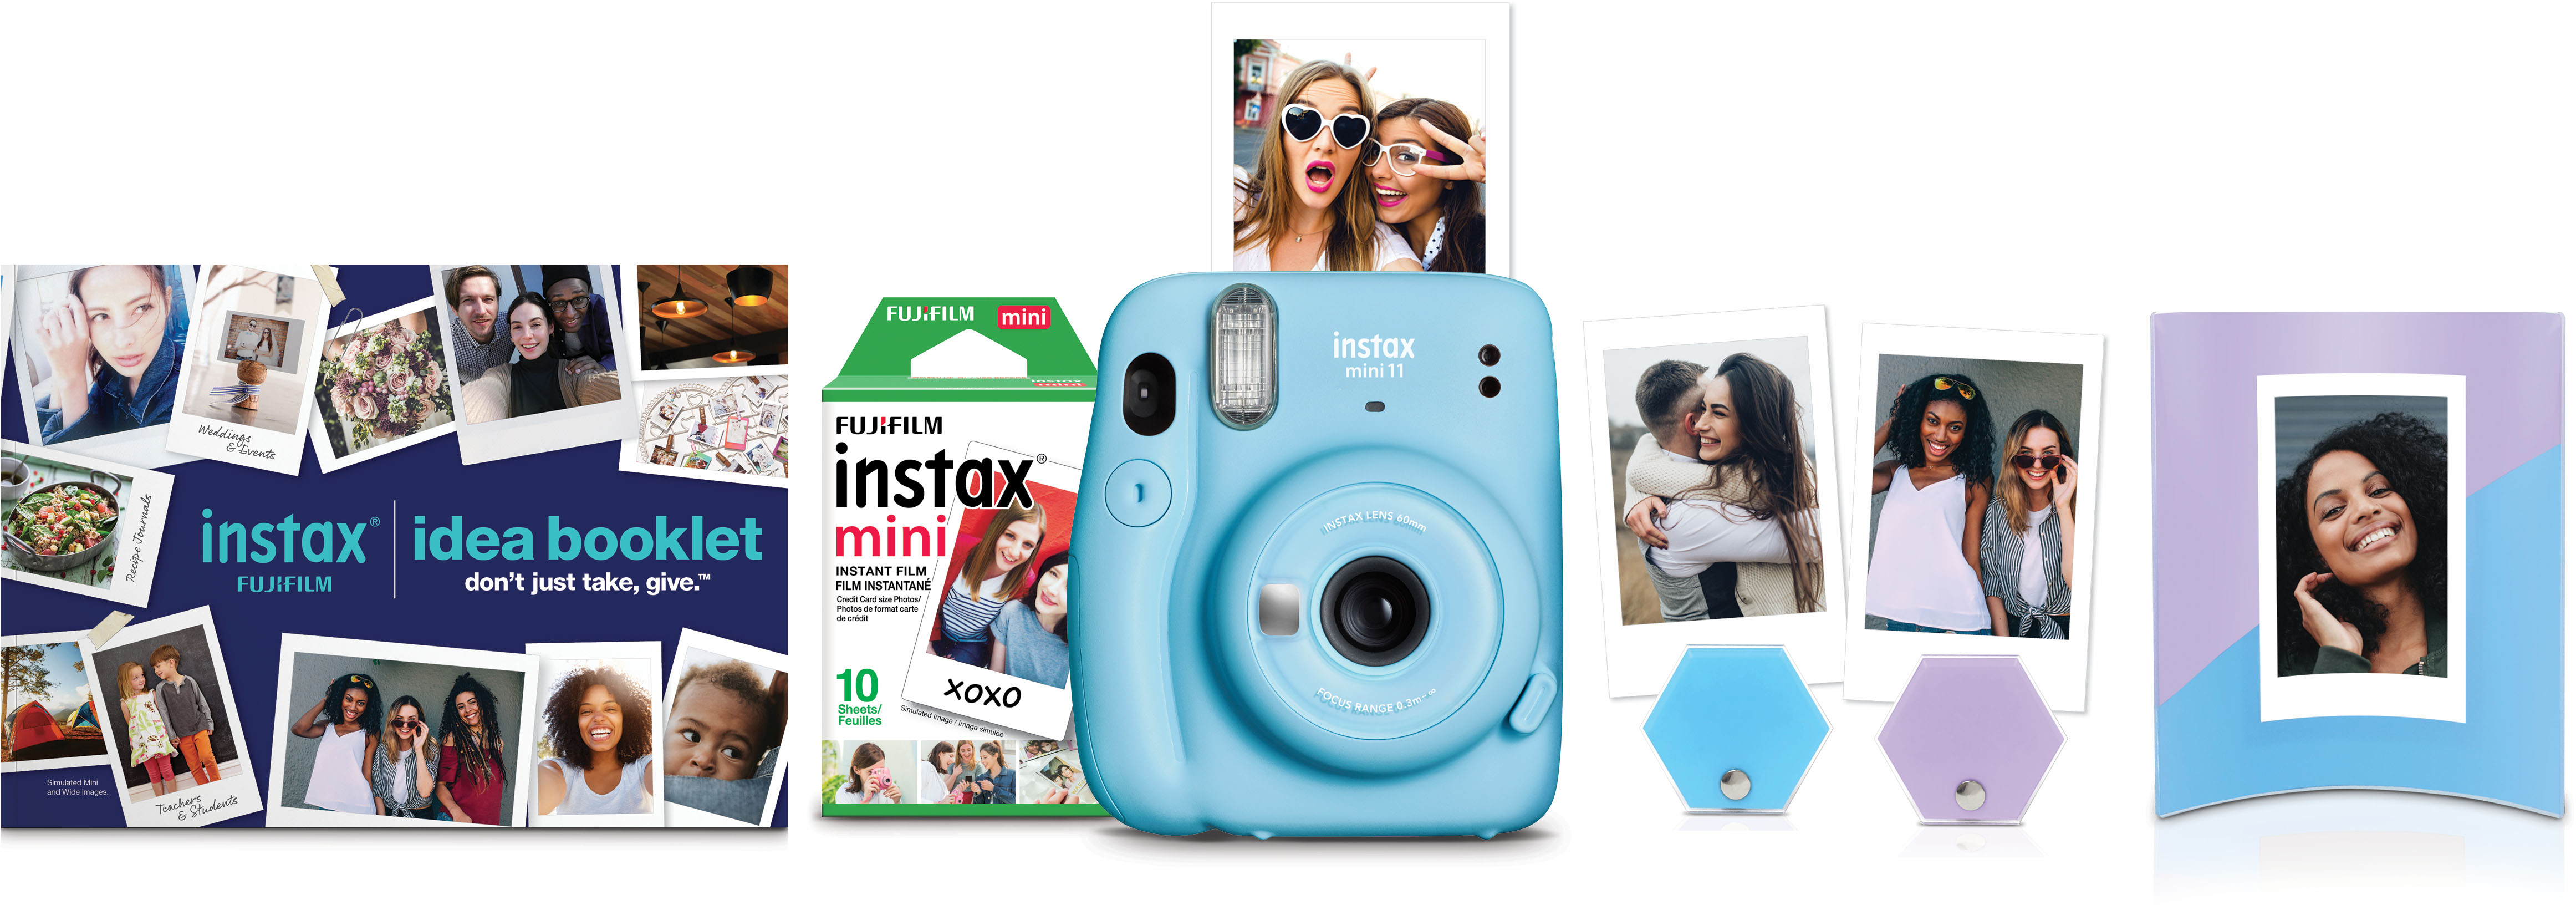 Fujifilm Instax Mini 11 Instant Camera - Sky Blue (16654762) + Fujifilm  Instax Mini Twin Pack Instant Film (16437396) + Single Pack Rainbow Film +